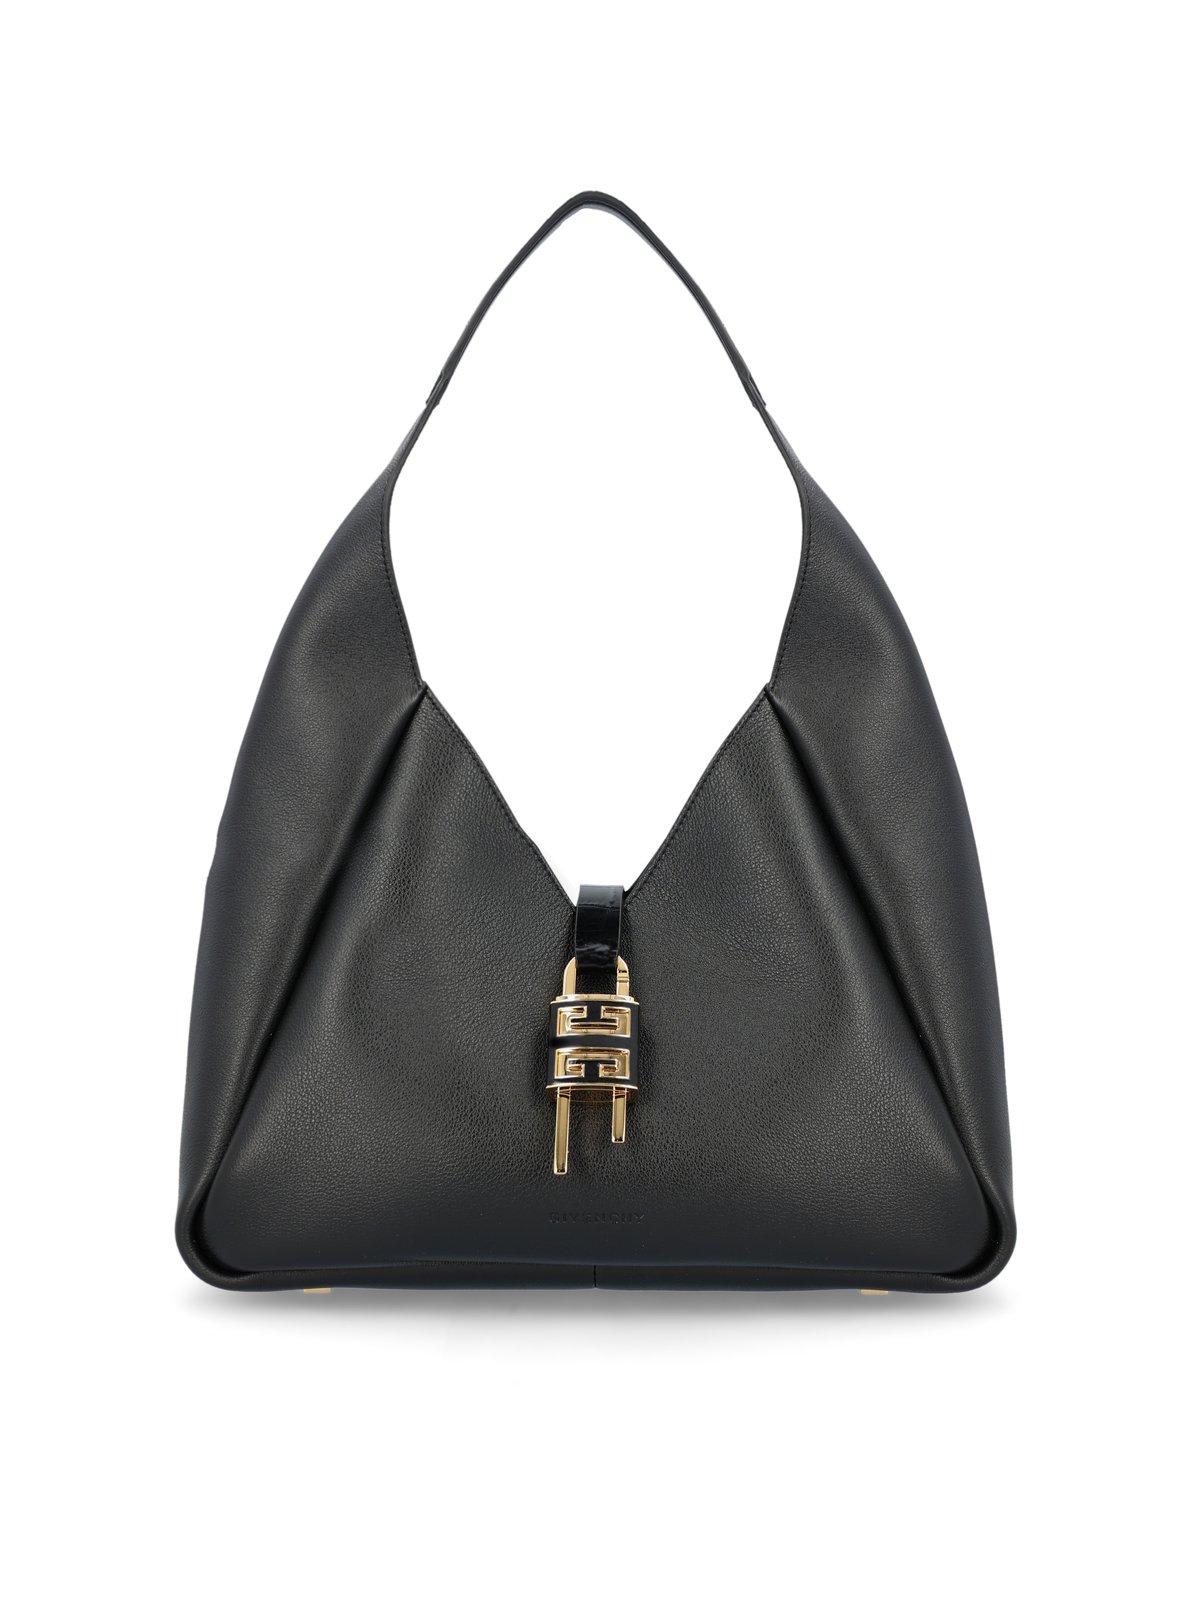 Givenchy Medium G-hobo Bag